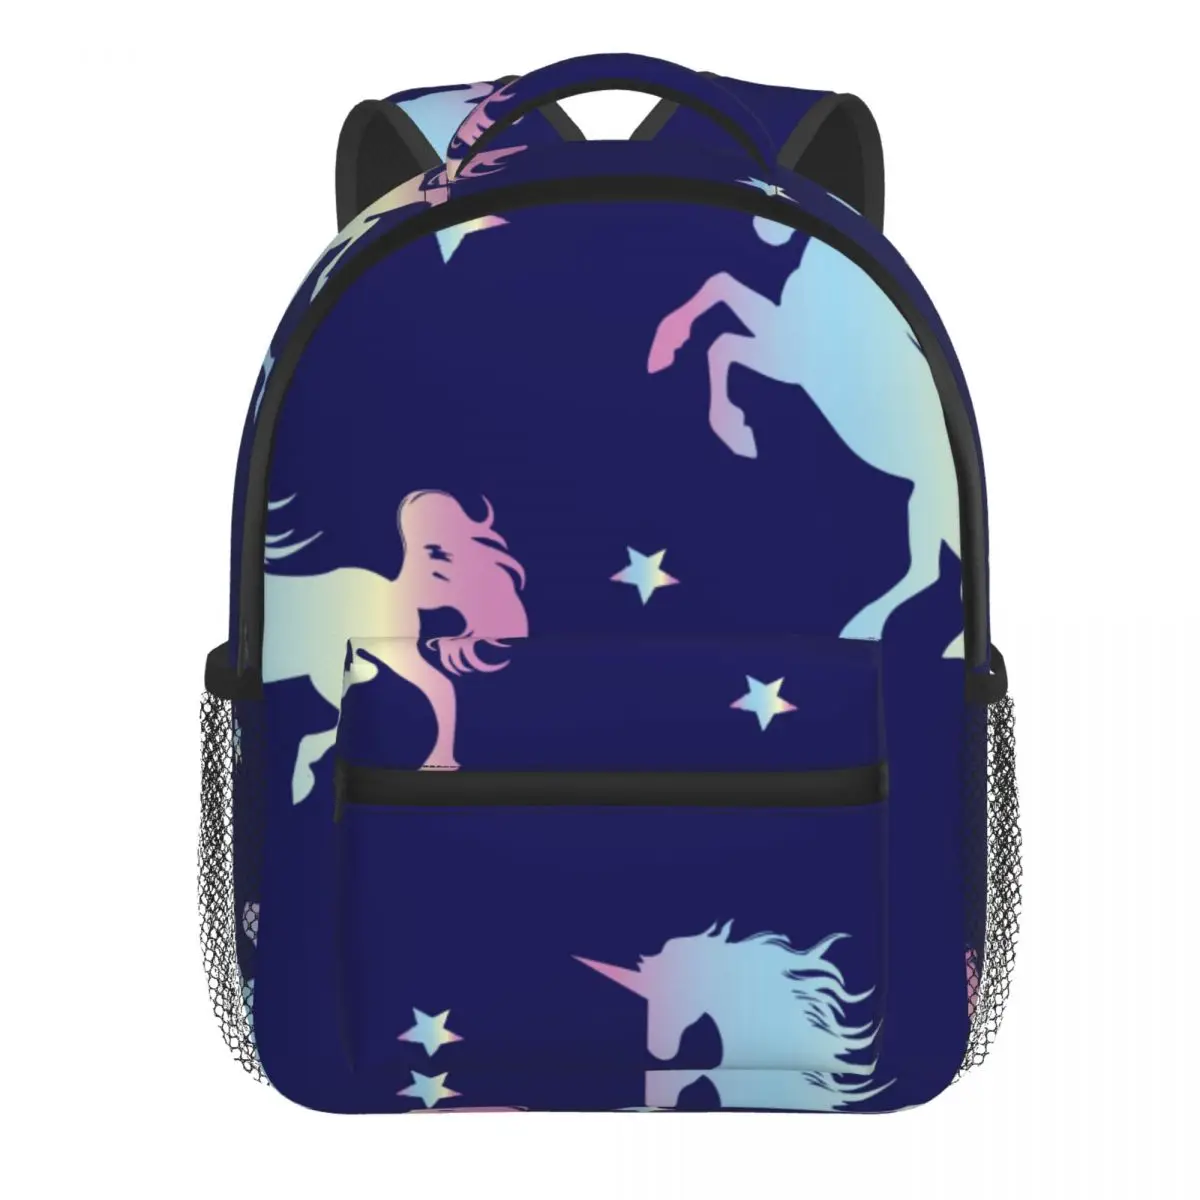 Holographic Magic Unicorn With Star Baby Backpack Kindergarten Schoolbag Kids Children School Bag